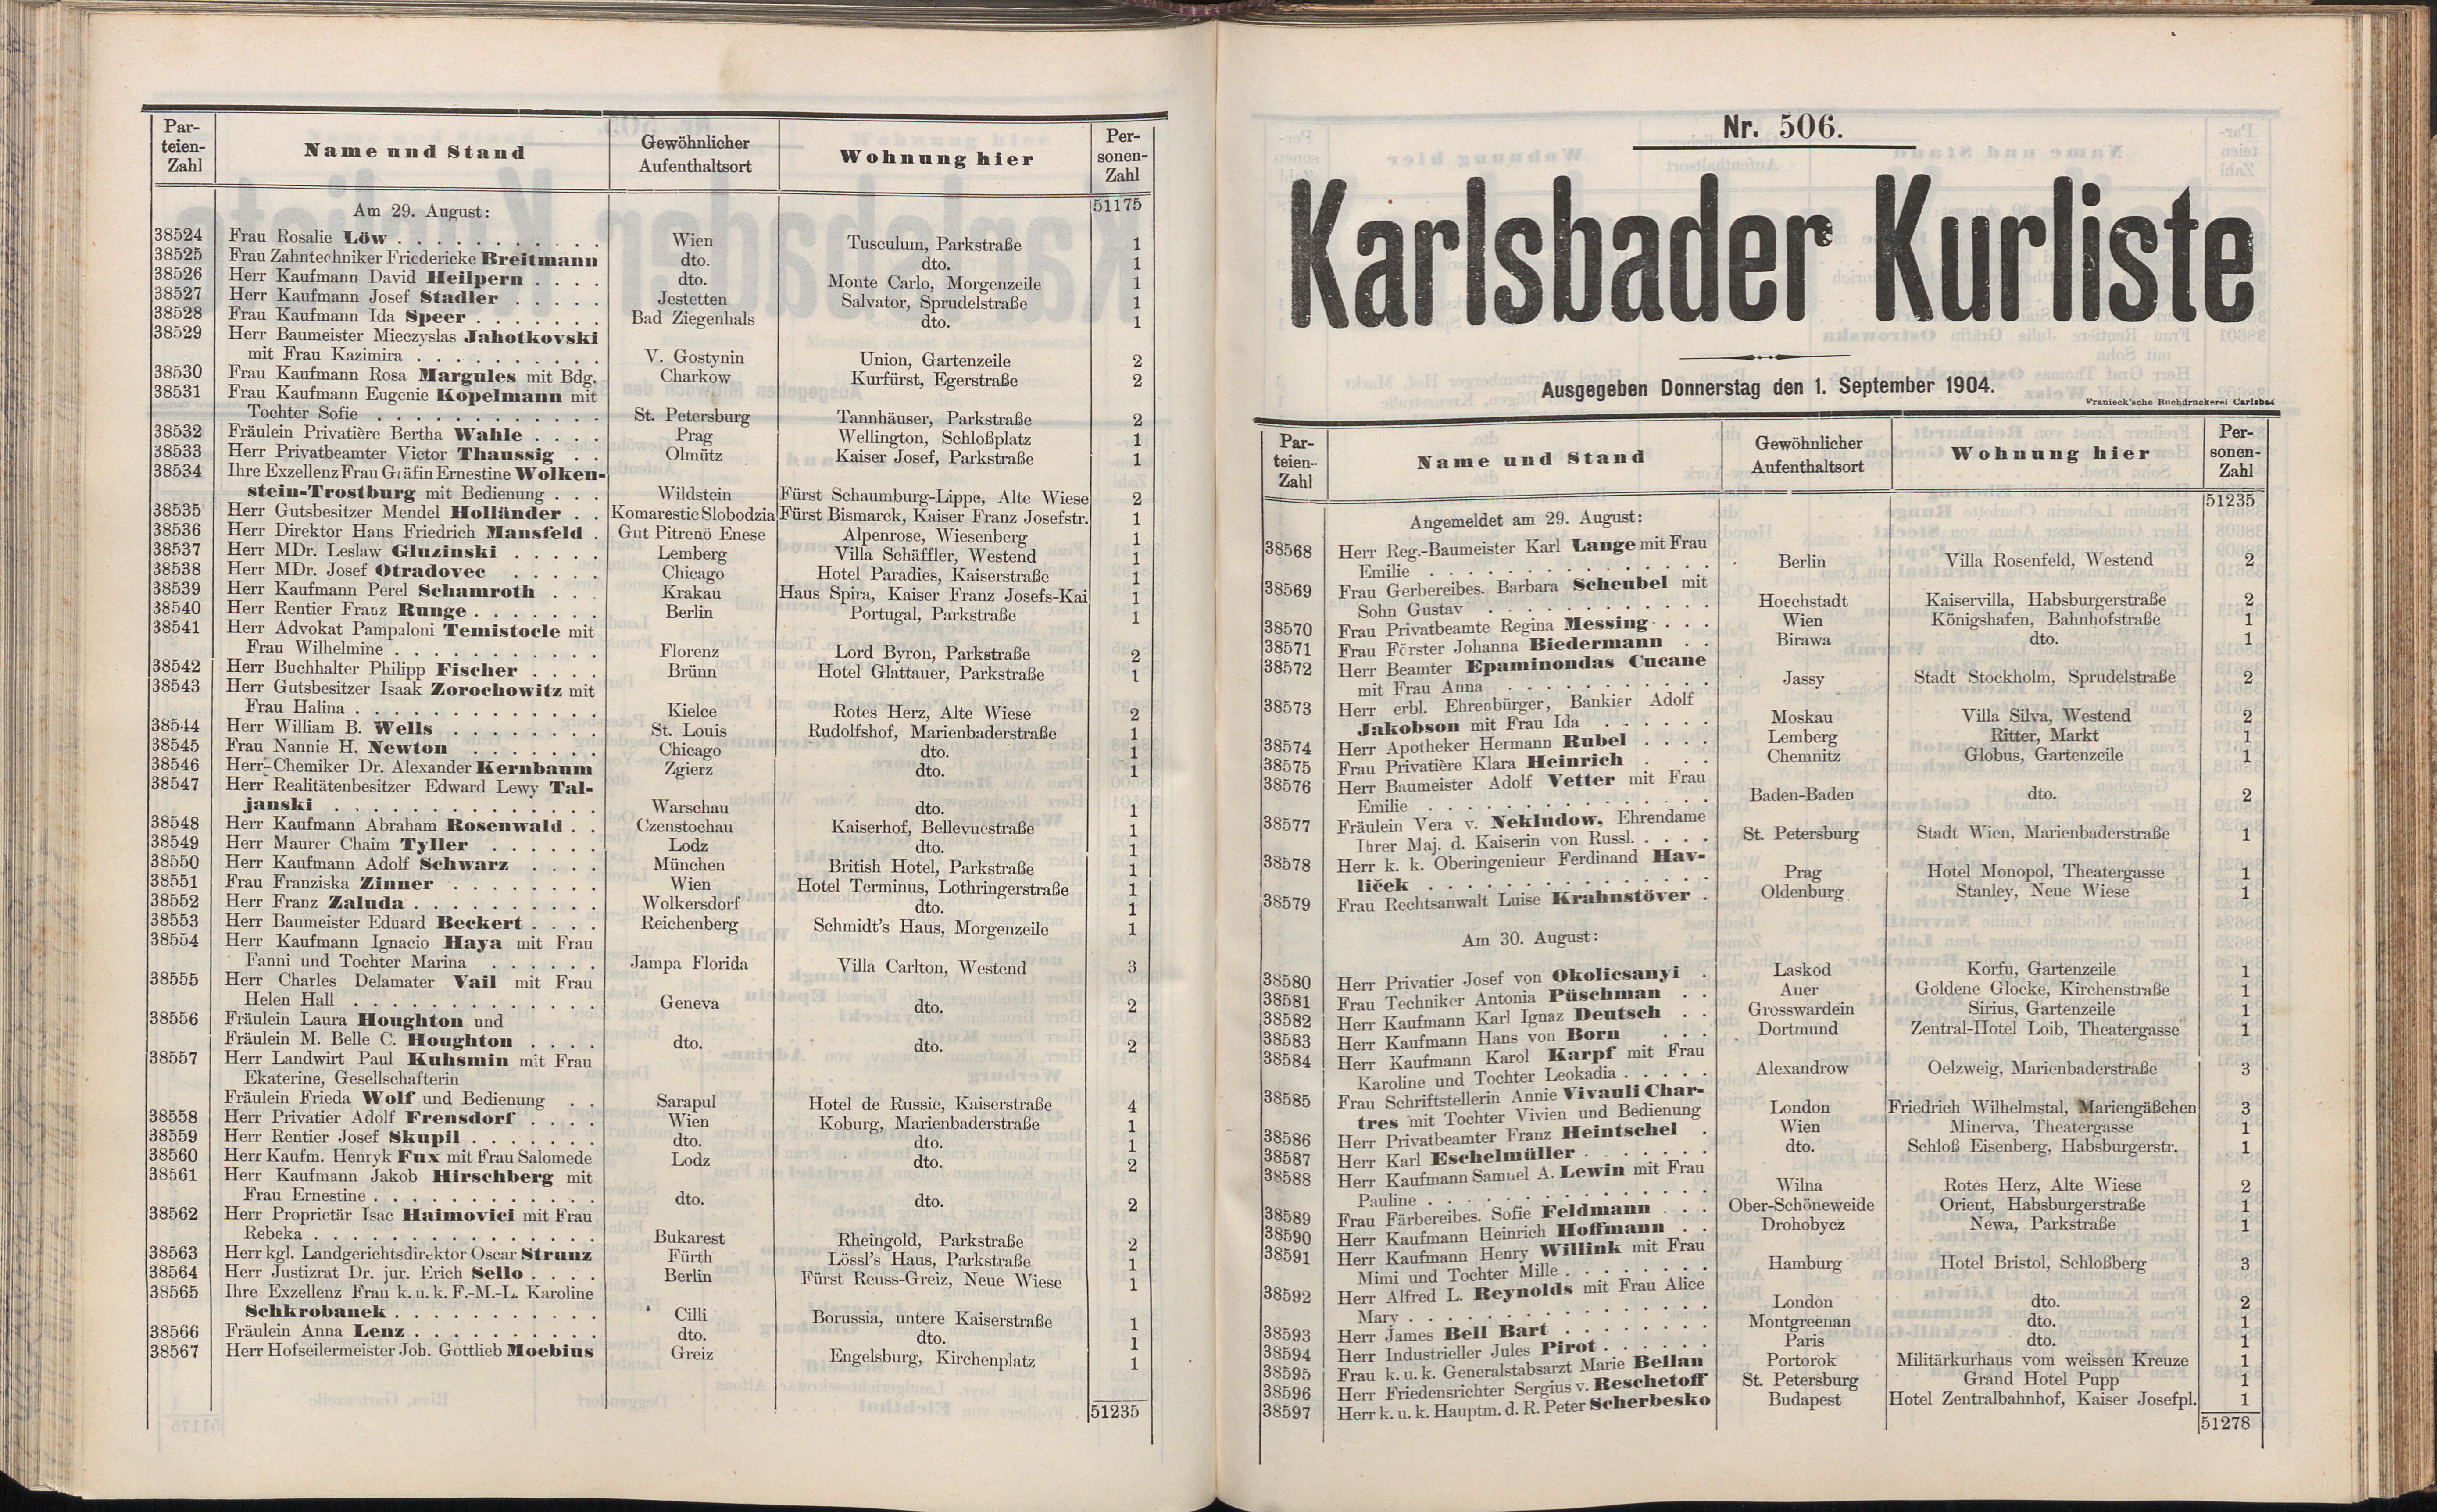 528. soap-kv_knihovna_karlsbader-kurliste-1904_5290